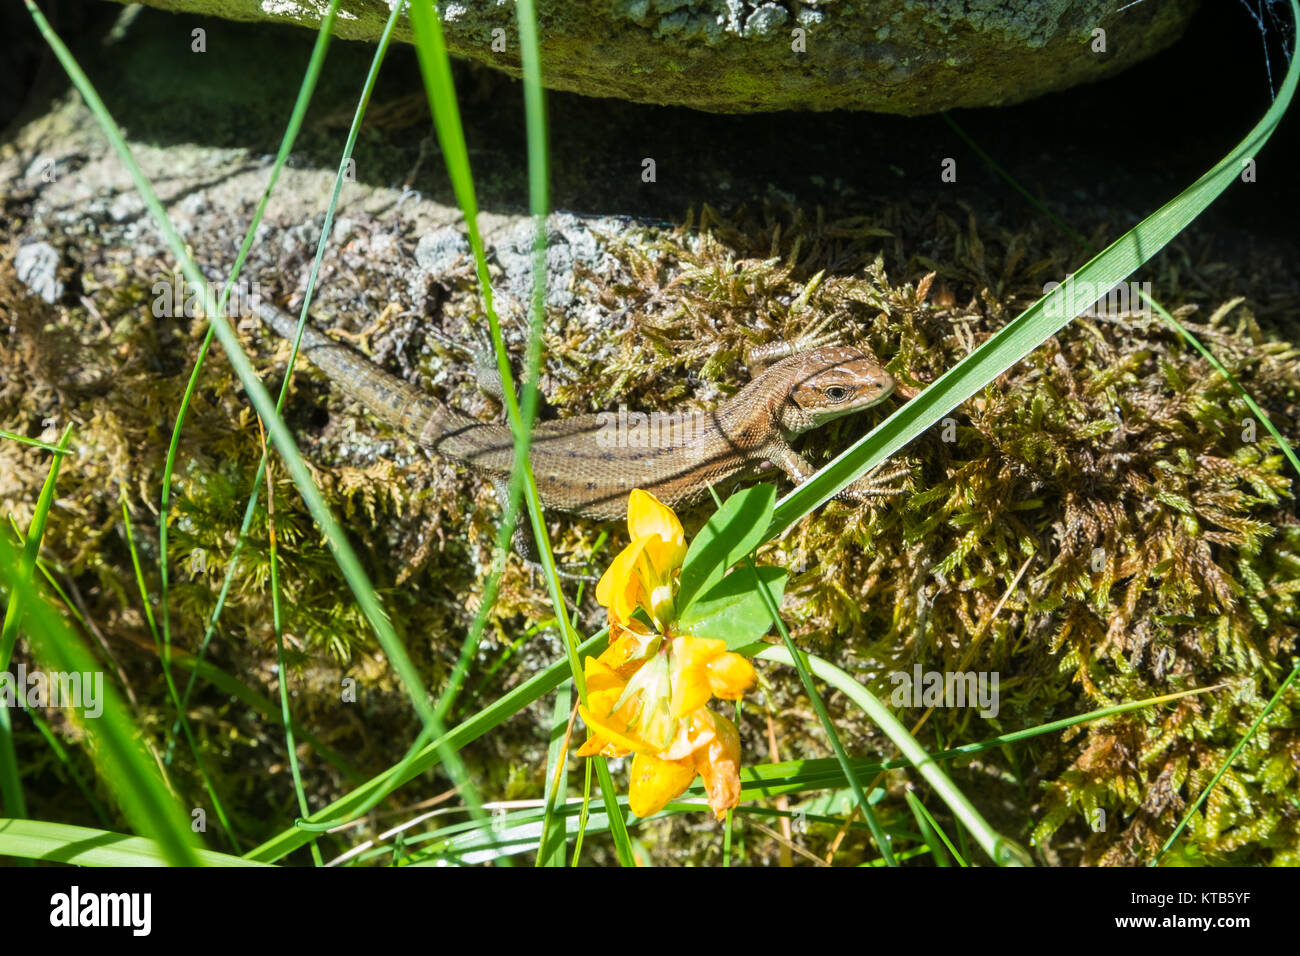 Basking common lizard. Stock Photo